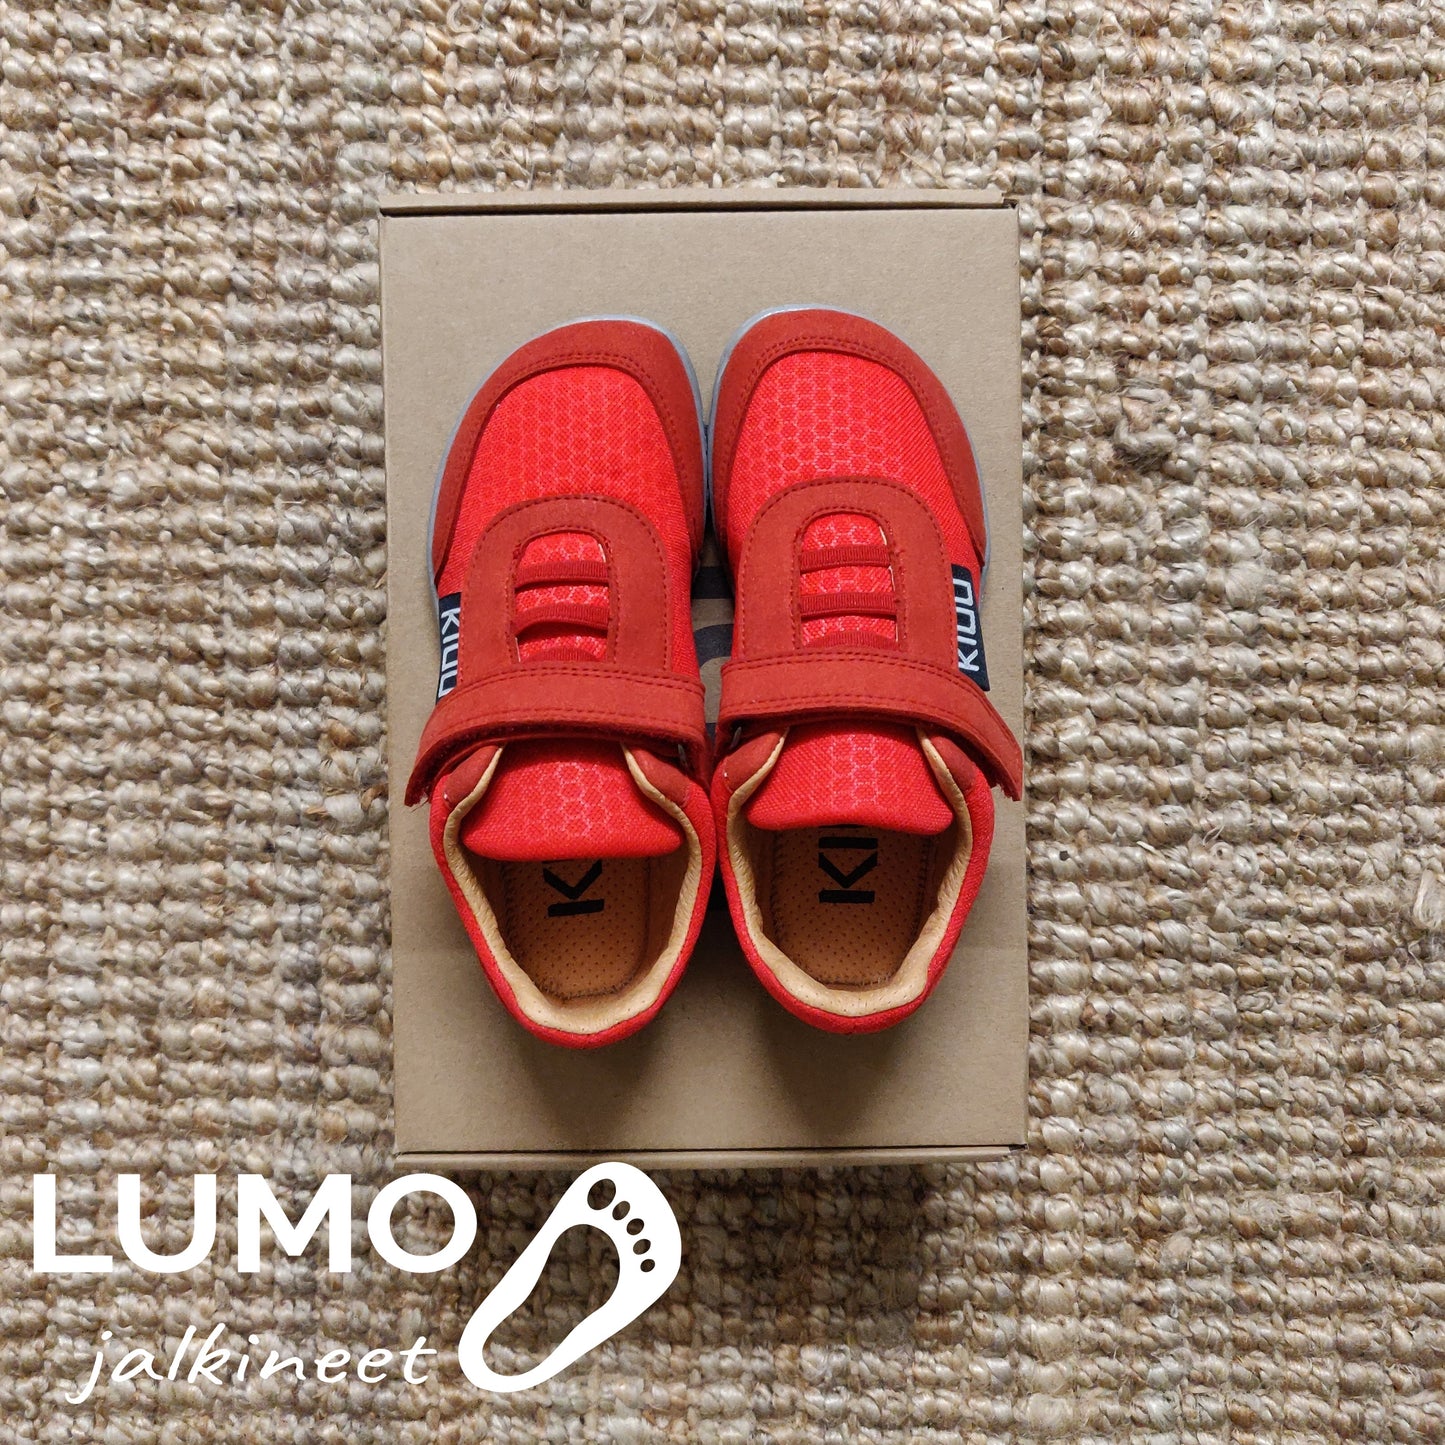 KIUU IO Air barefoot shoes, Red 28, 29